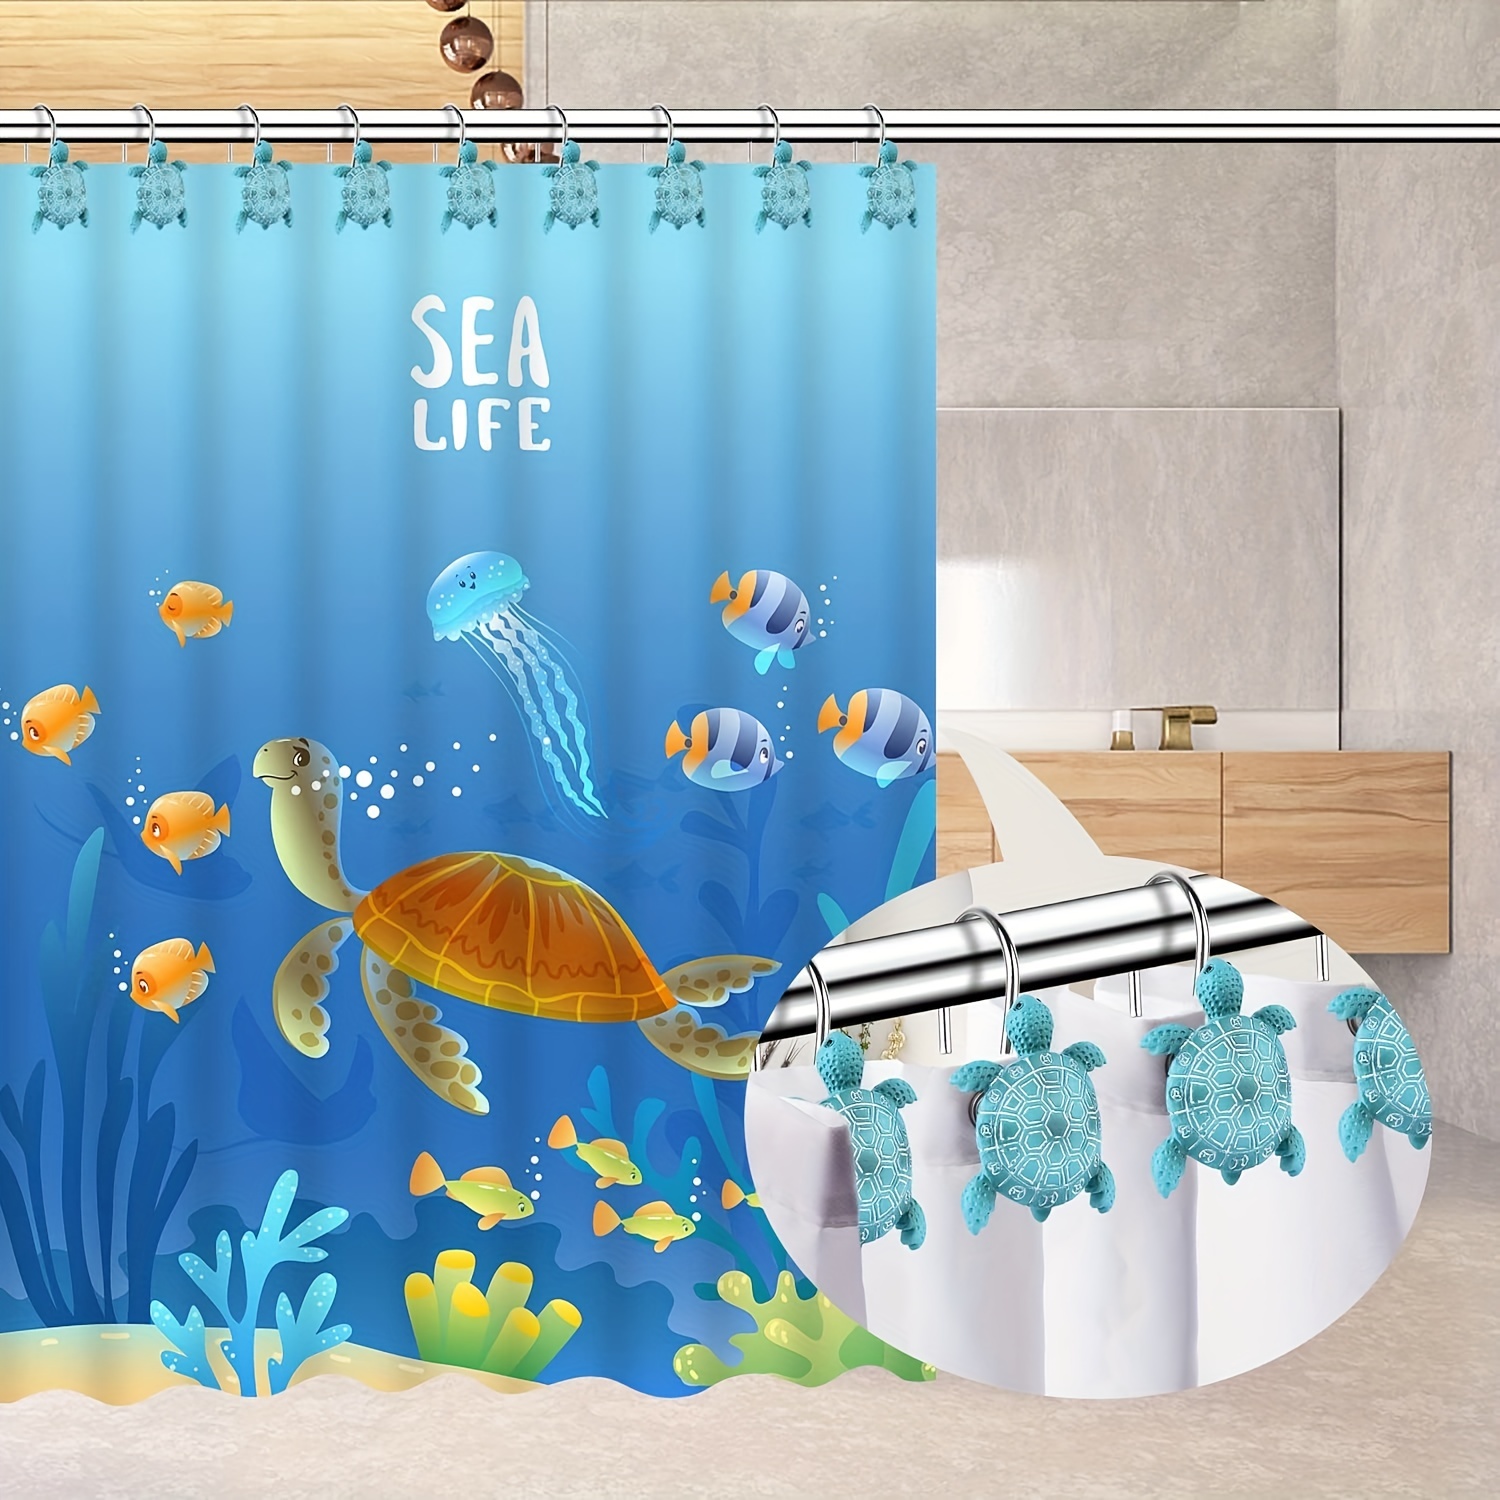 12pcs Sea Turtles Shower Curtain Hooks Rings For Bathroom, Metal Shower  Curtain Hanger Hooks, Decorative Bath Room Accessories Set, Tropical Beach  Fas